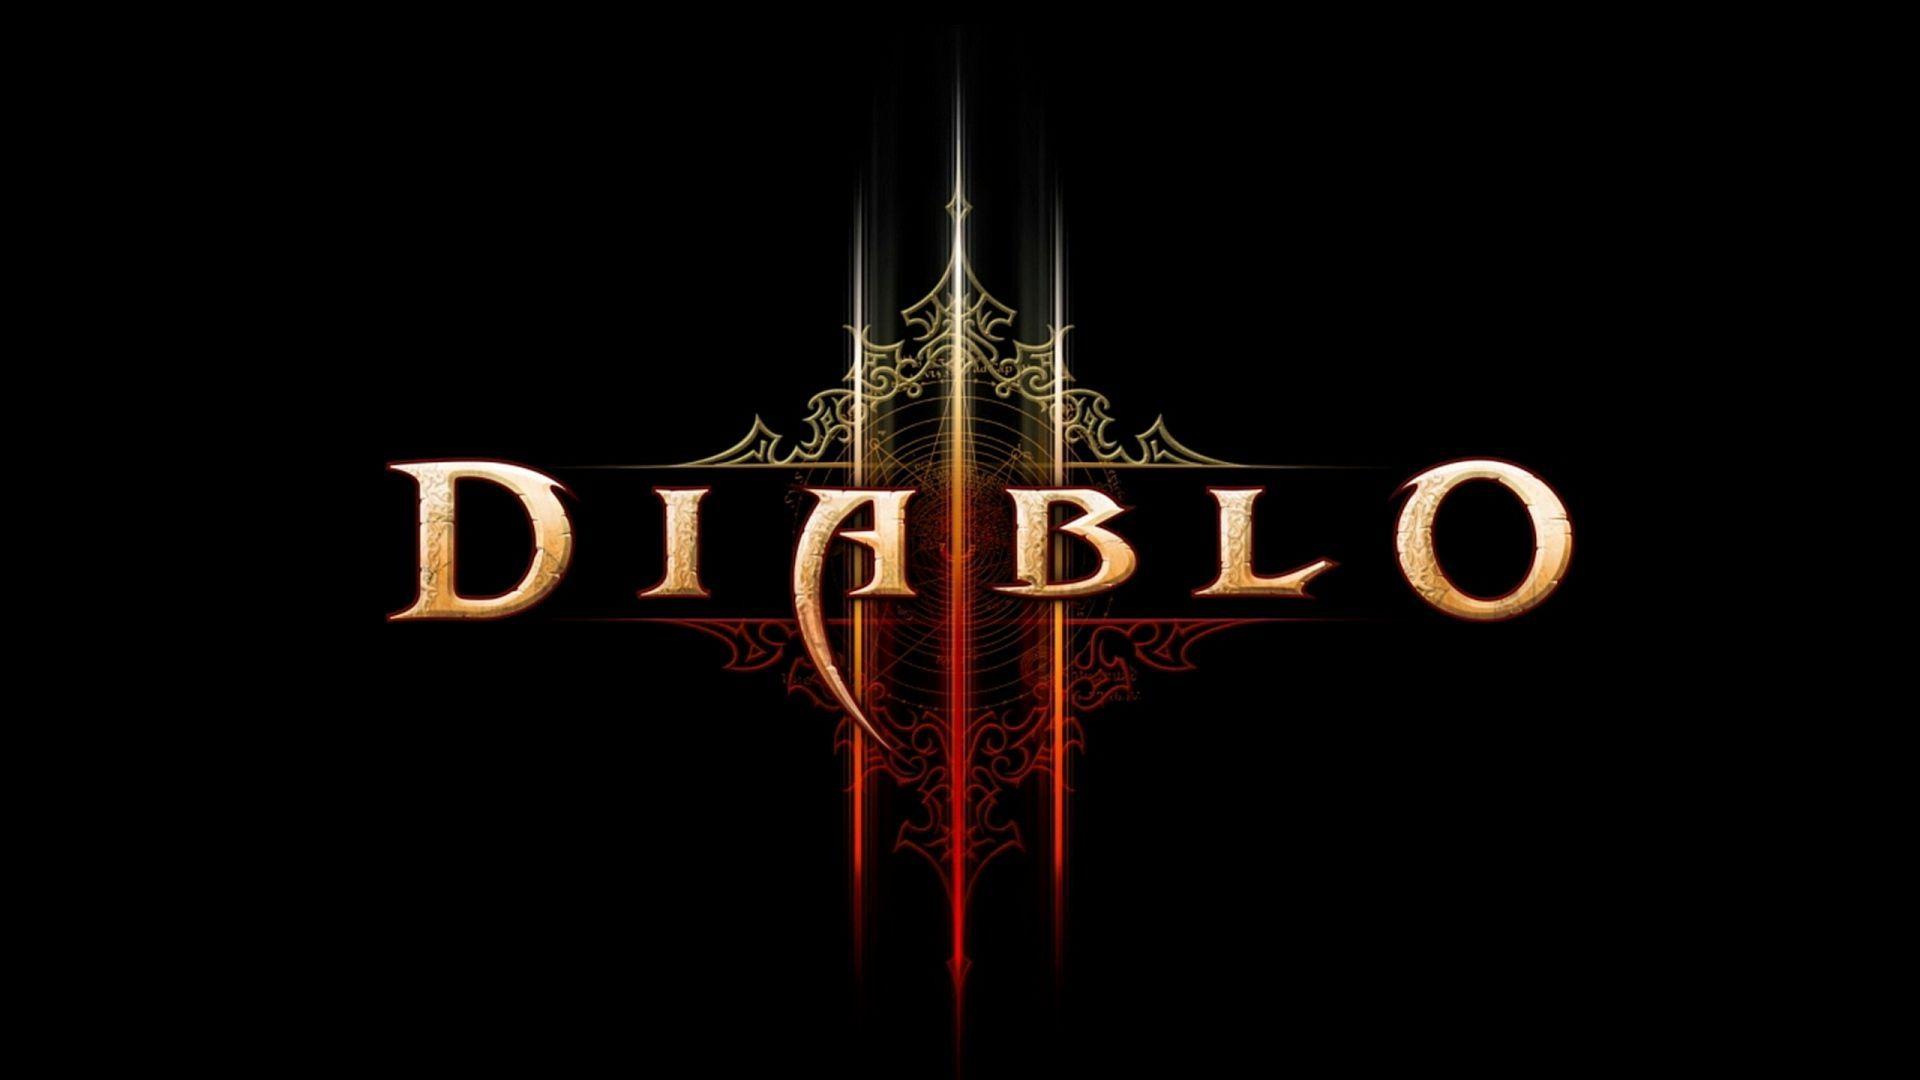 Stunning Diablo 3 Name Text Font Background Wallpaper « Kuff Games